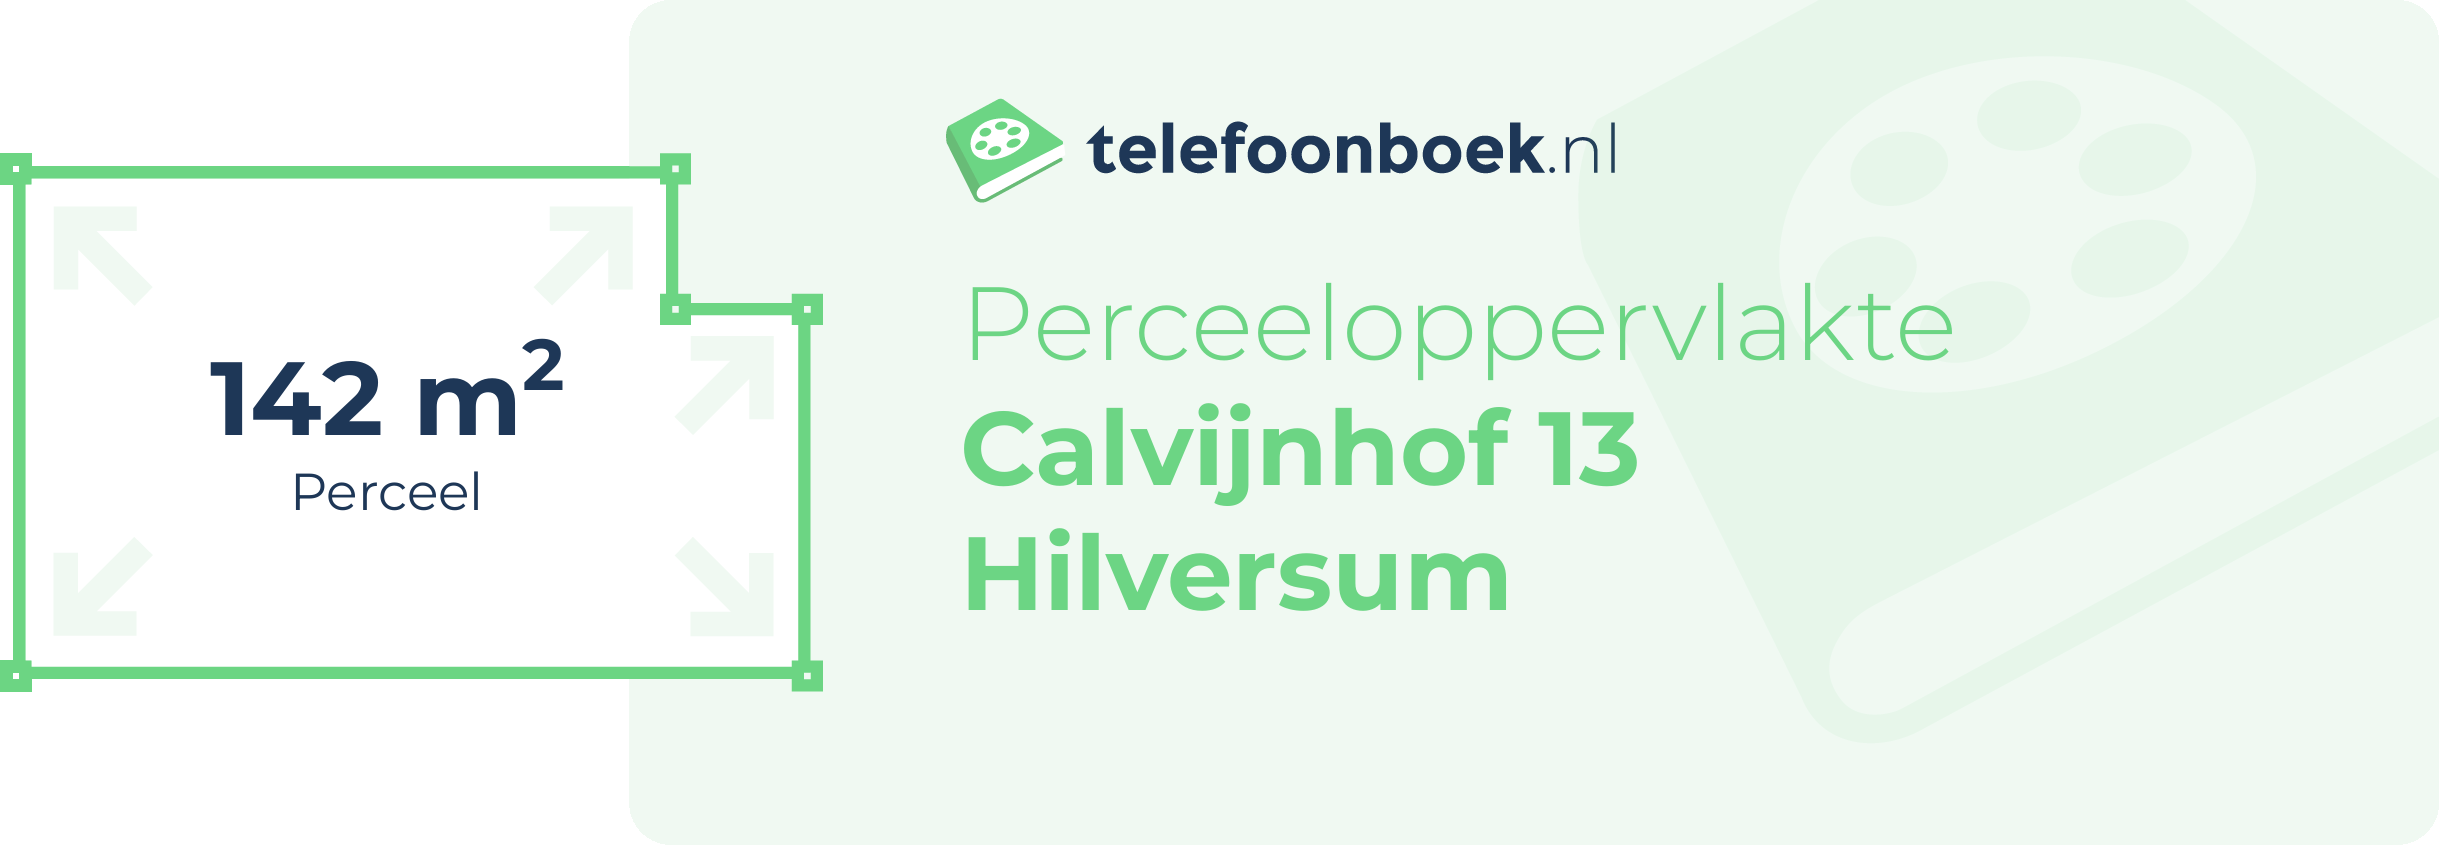 Perceeloppervlakte Calvijnhof 13 Hilversum